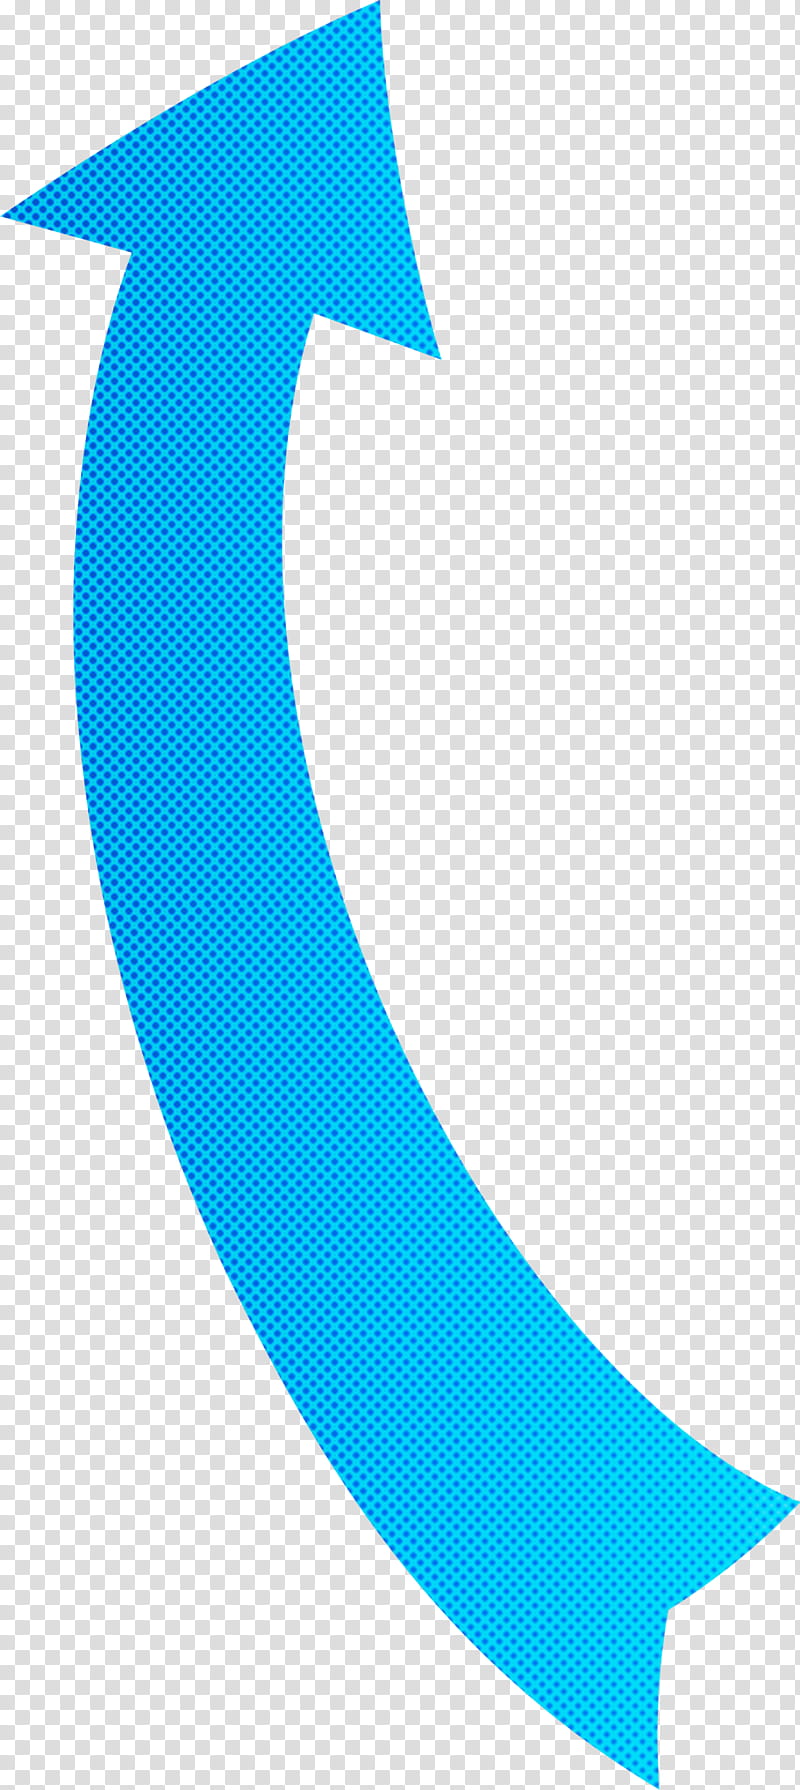 Rising Arrow, Aqua, Blue, Turquoise, Teal, Azure, Line, Electric Blue transparent background PNG clipart